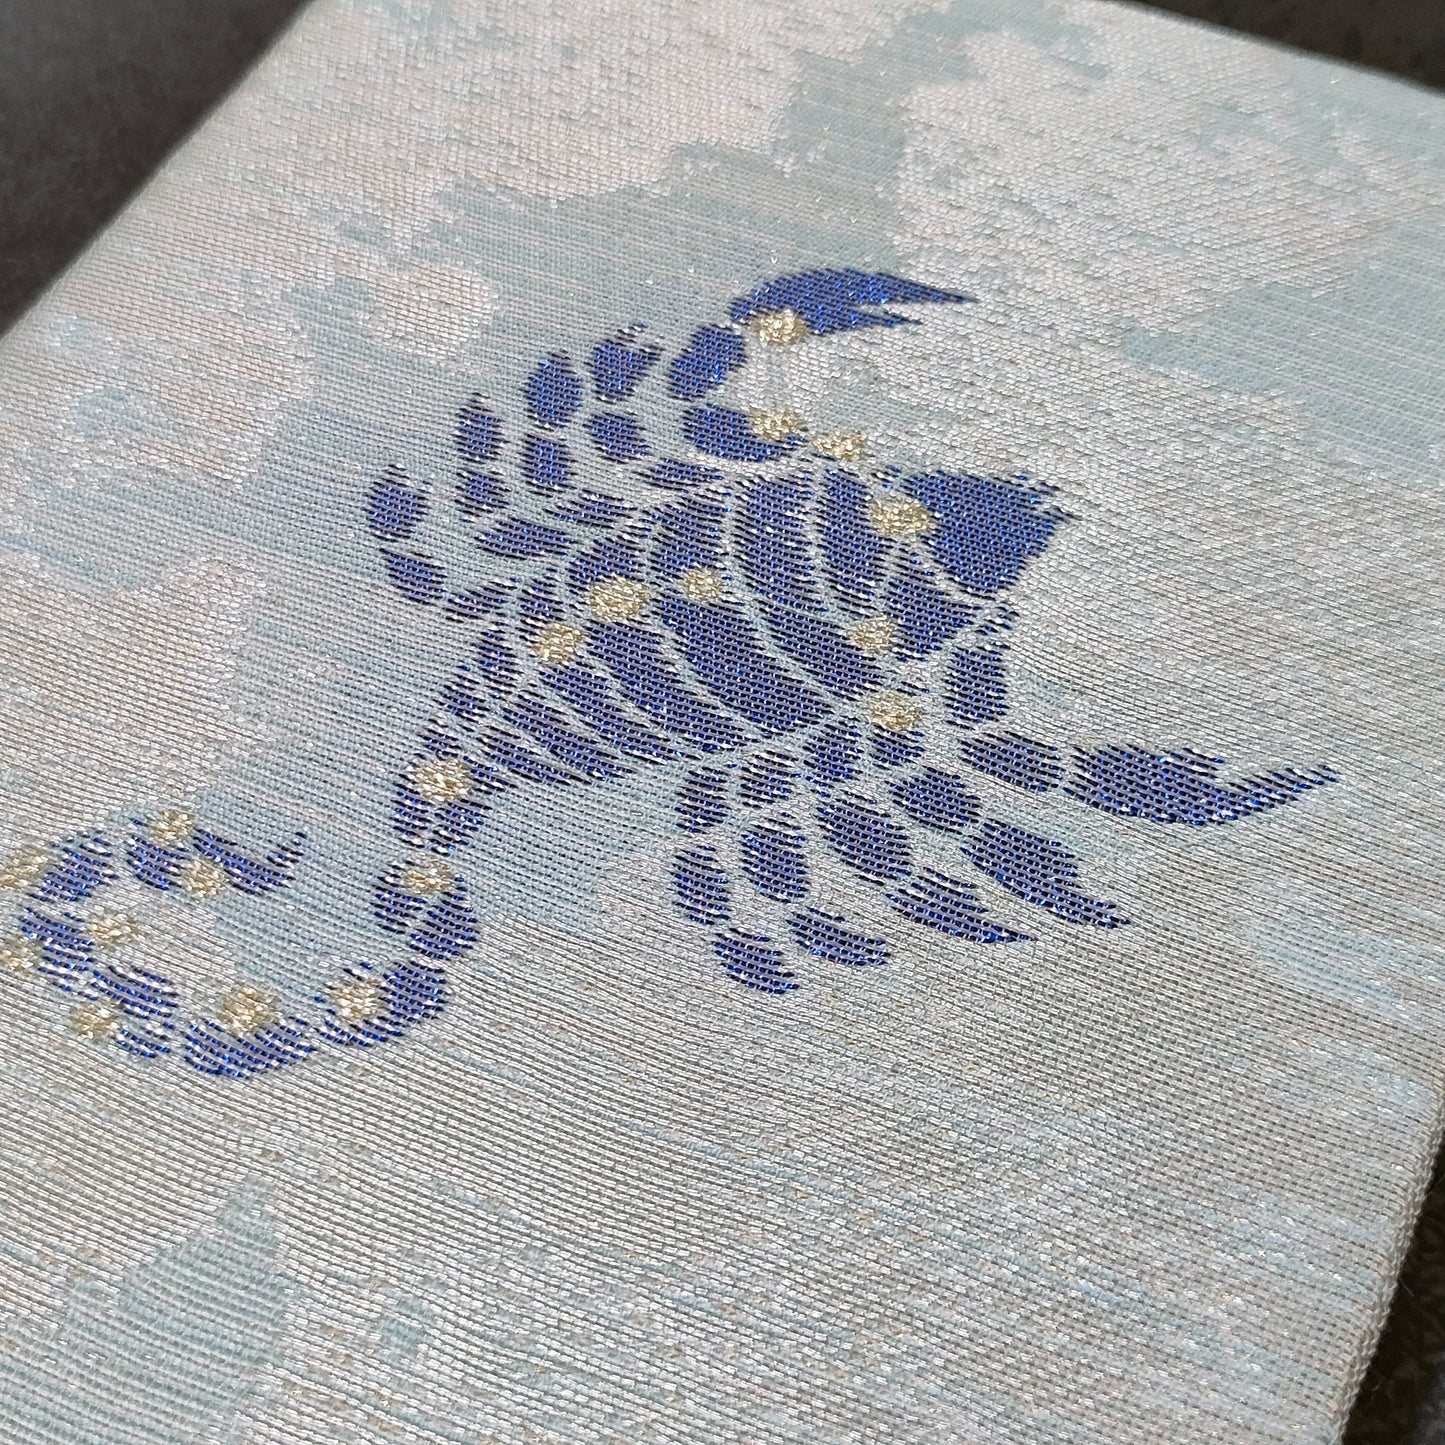 Nishijin Textile Stamp Book 12 Constellations - Taurus/Scorpio - Seiji